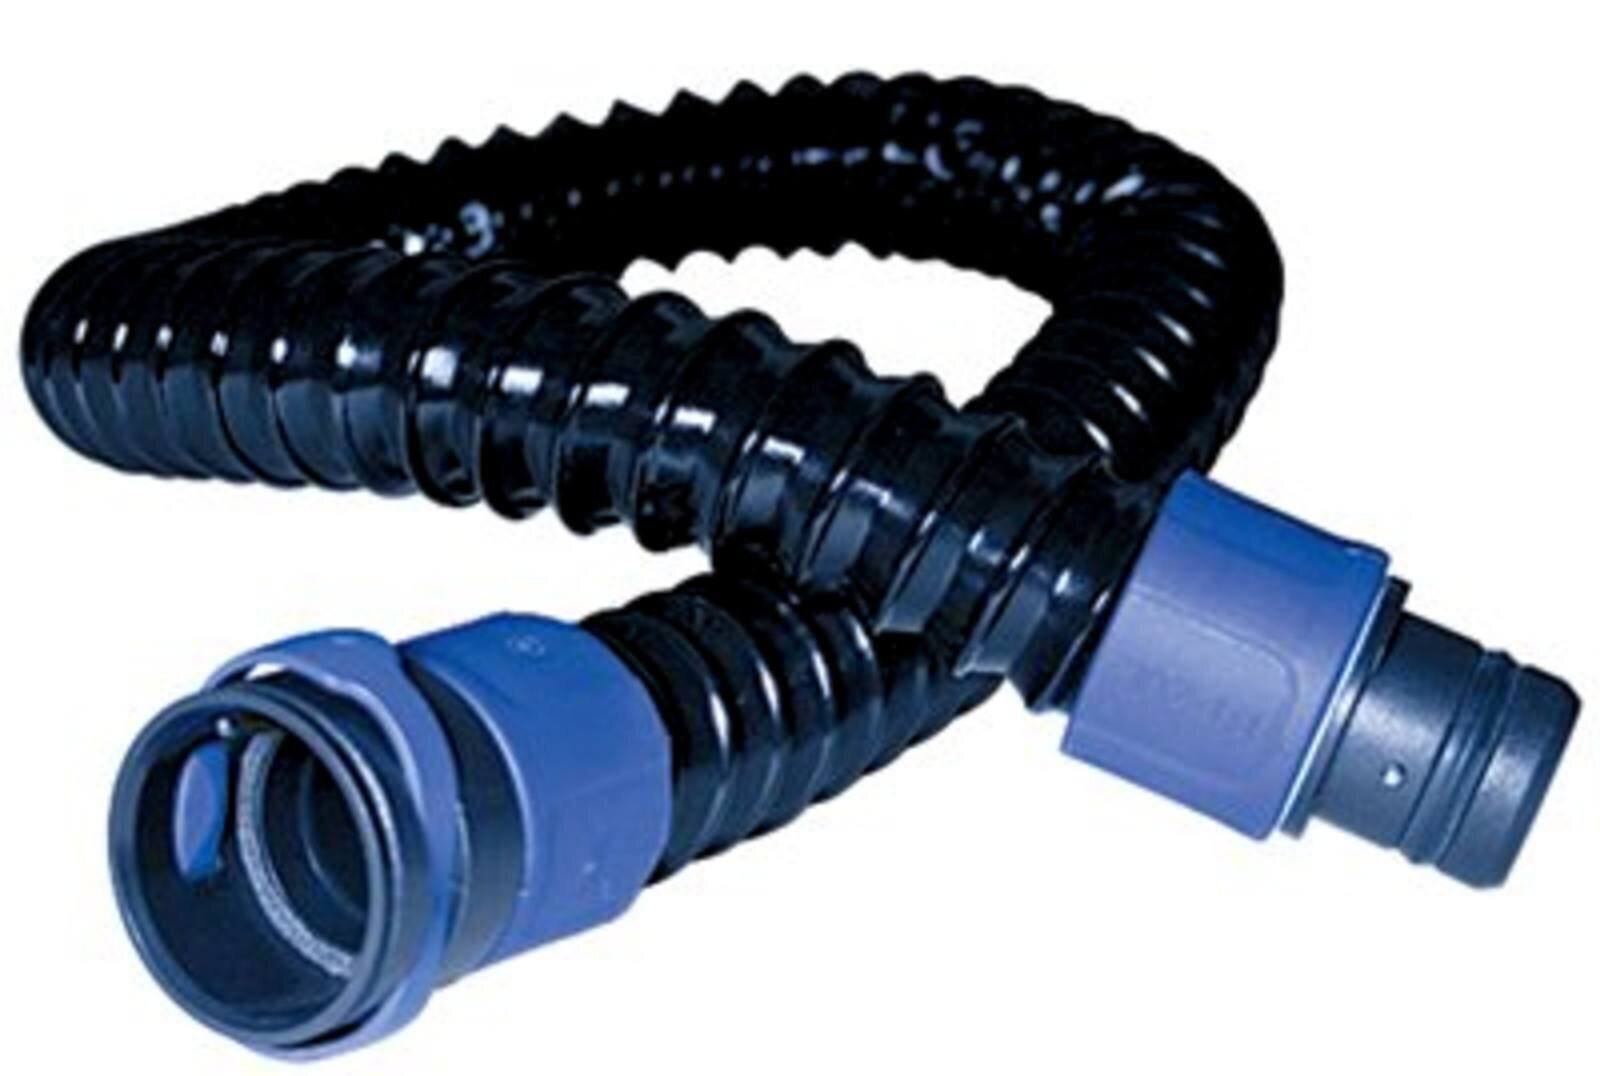 3M BT-20L PU light hose with steel spiral, long. Length 96.5cm